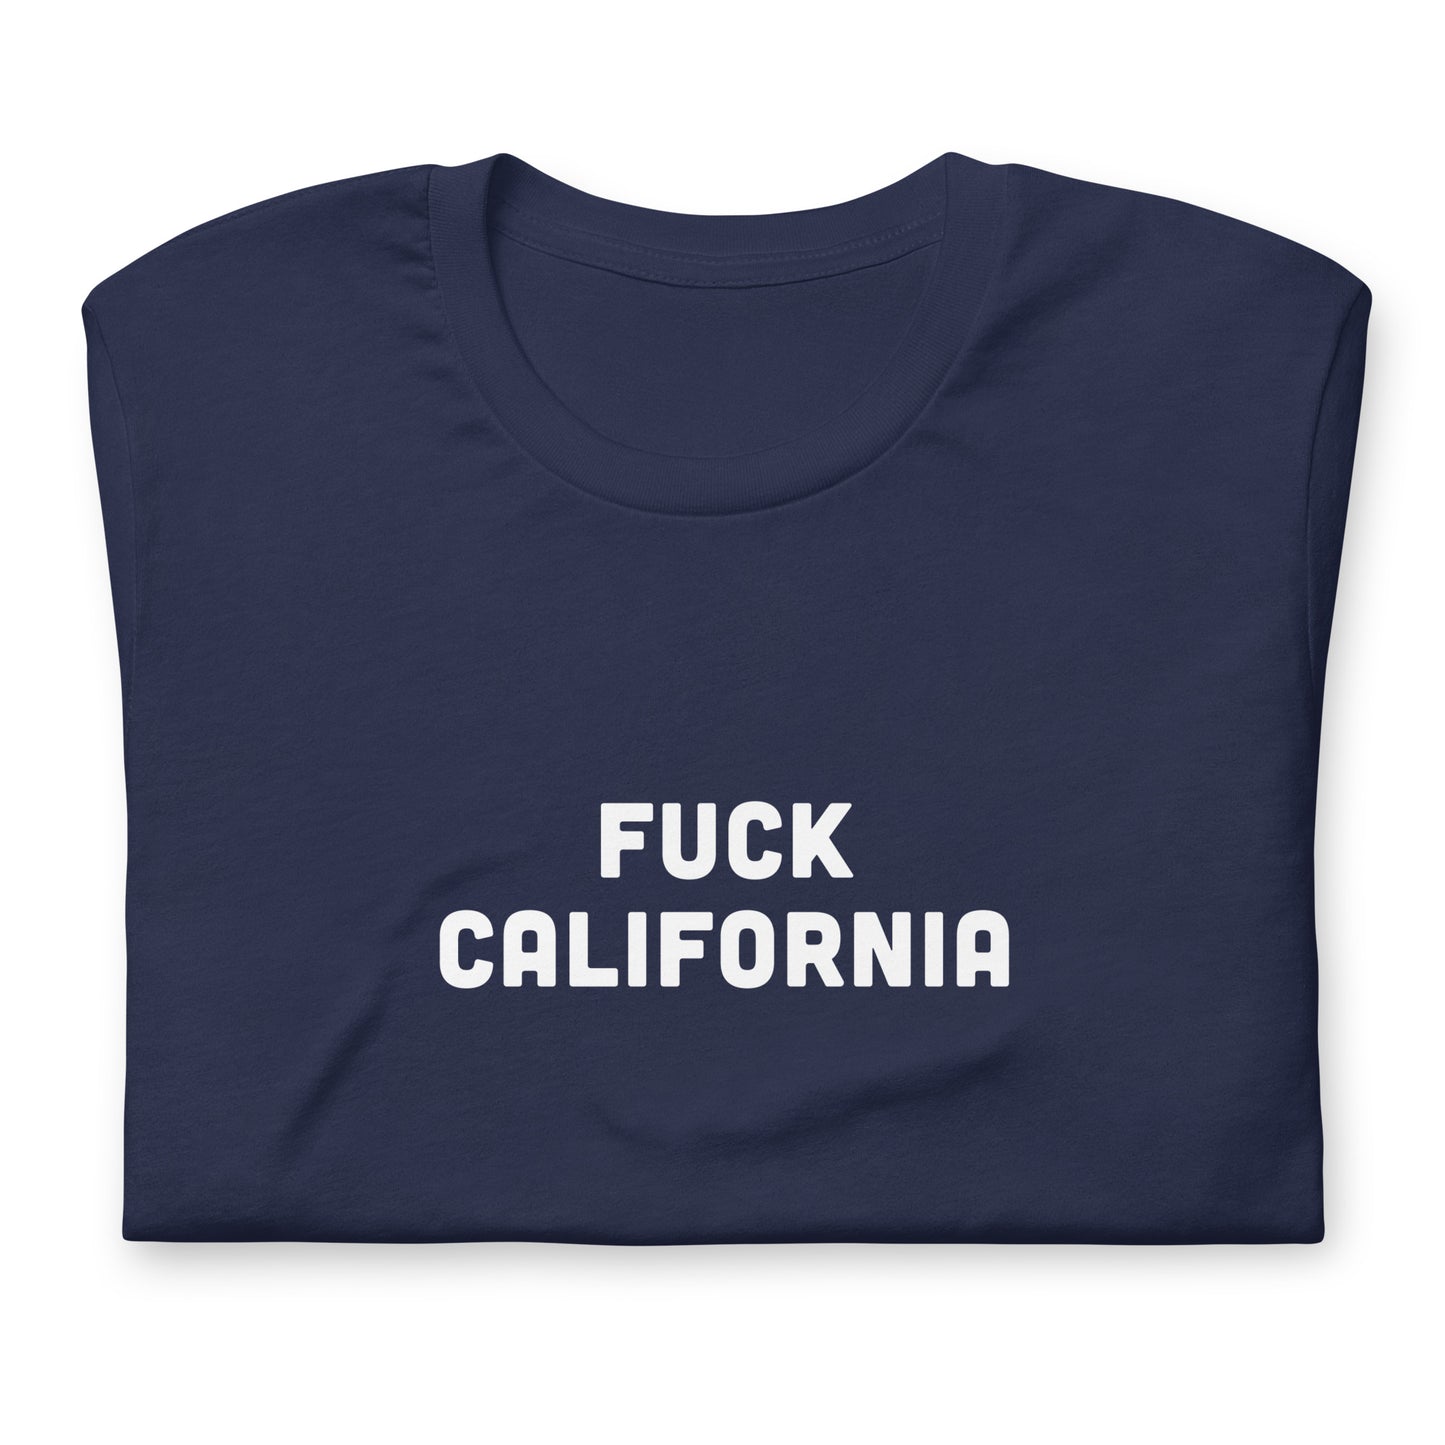 Fuck California T-Shirt Size L Color Black